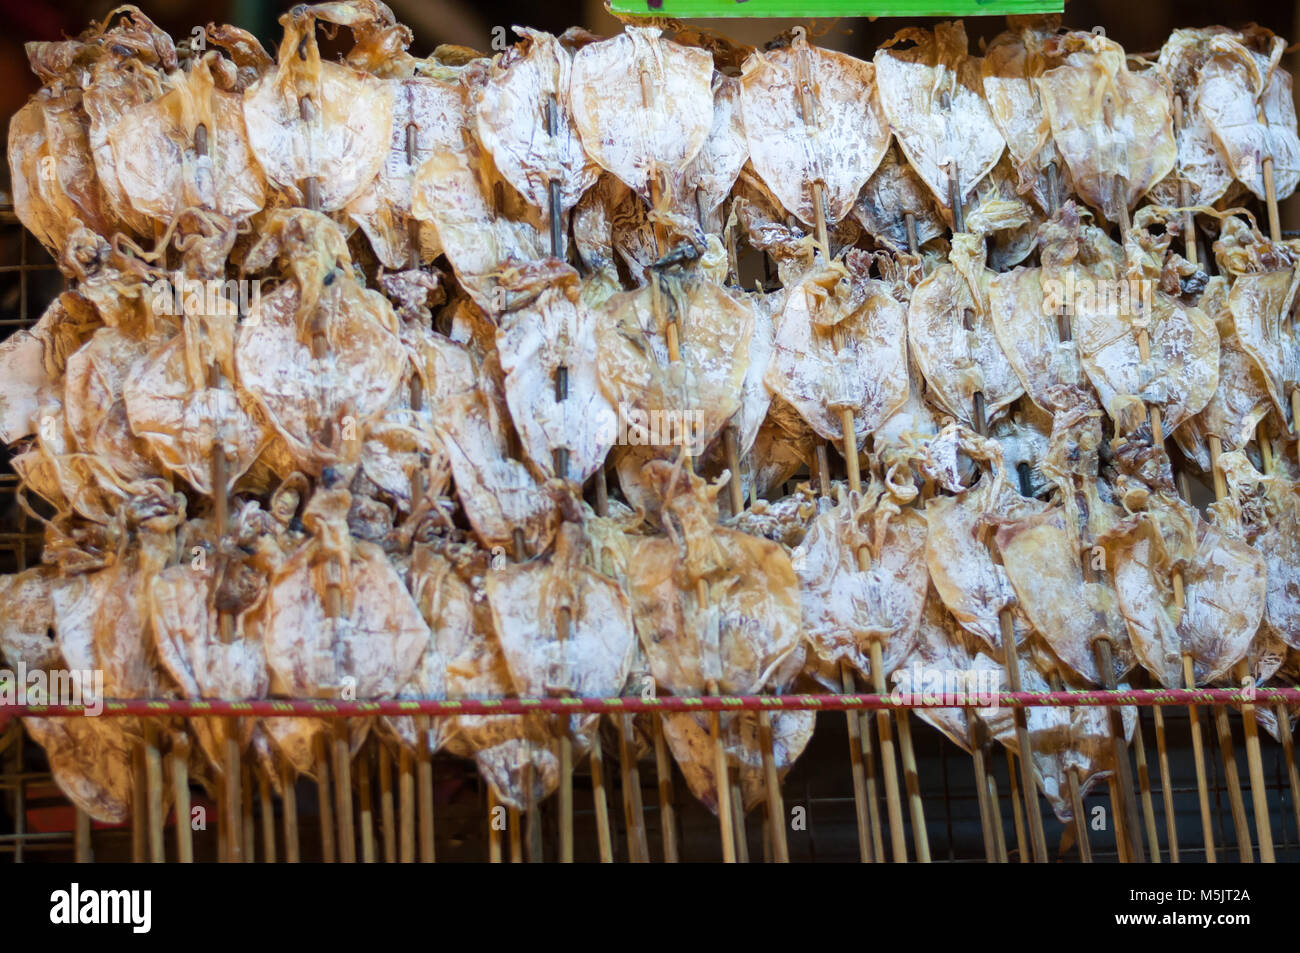 Squid Dry Stick Night Market Street Food Hintergrund Stockfoto